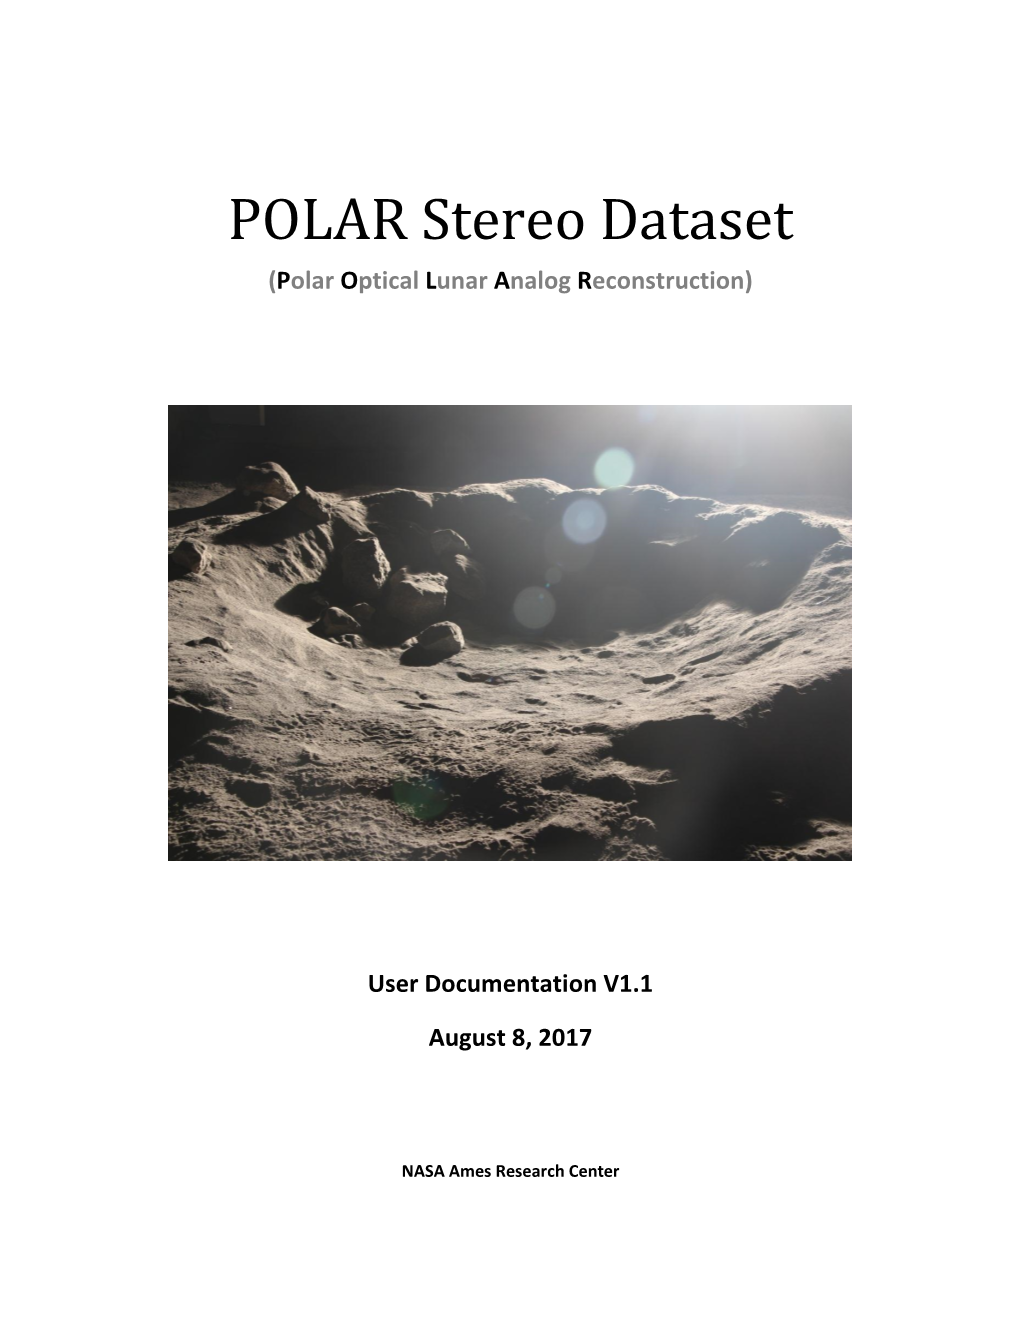 POLAR Stereo Dataset (Polar Optical Lunar Analog Reconstruction)